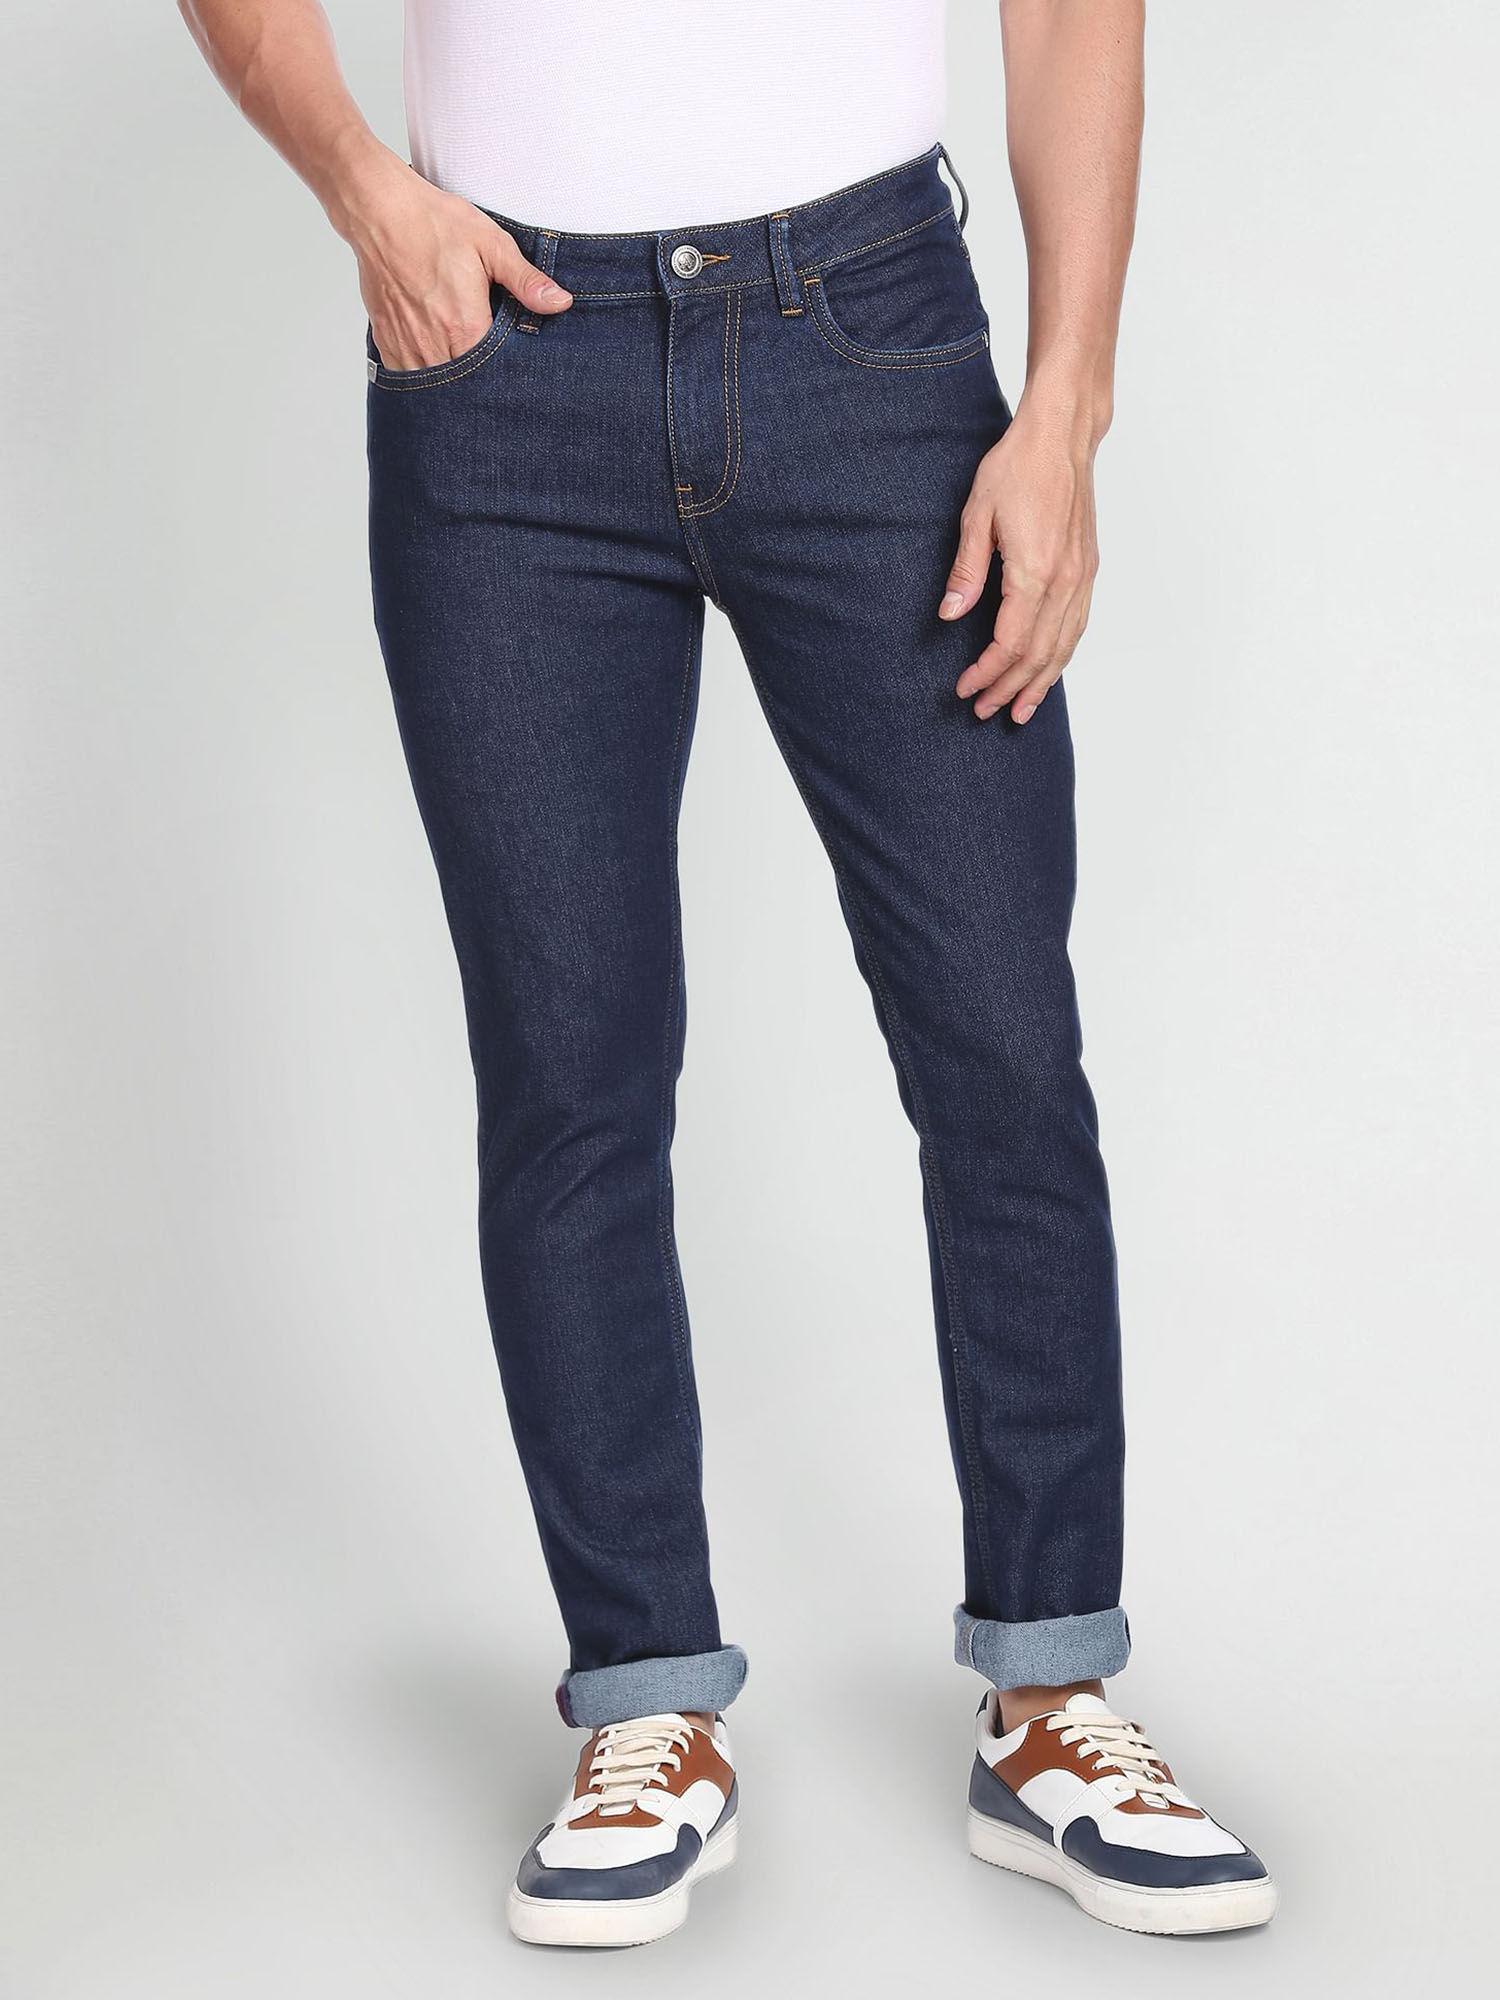 men-navy-blue-mid-rise-skinny-fit-jeans